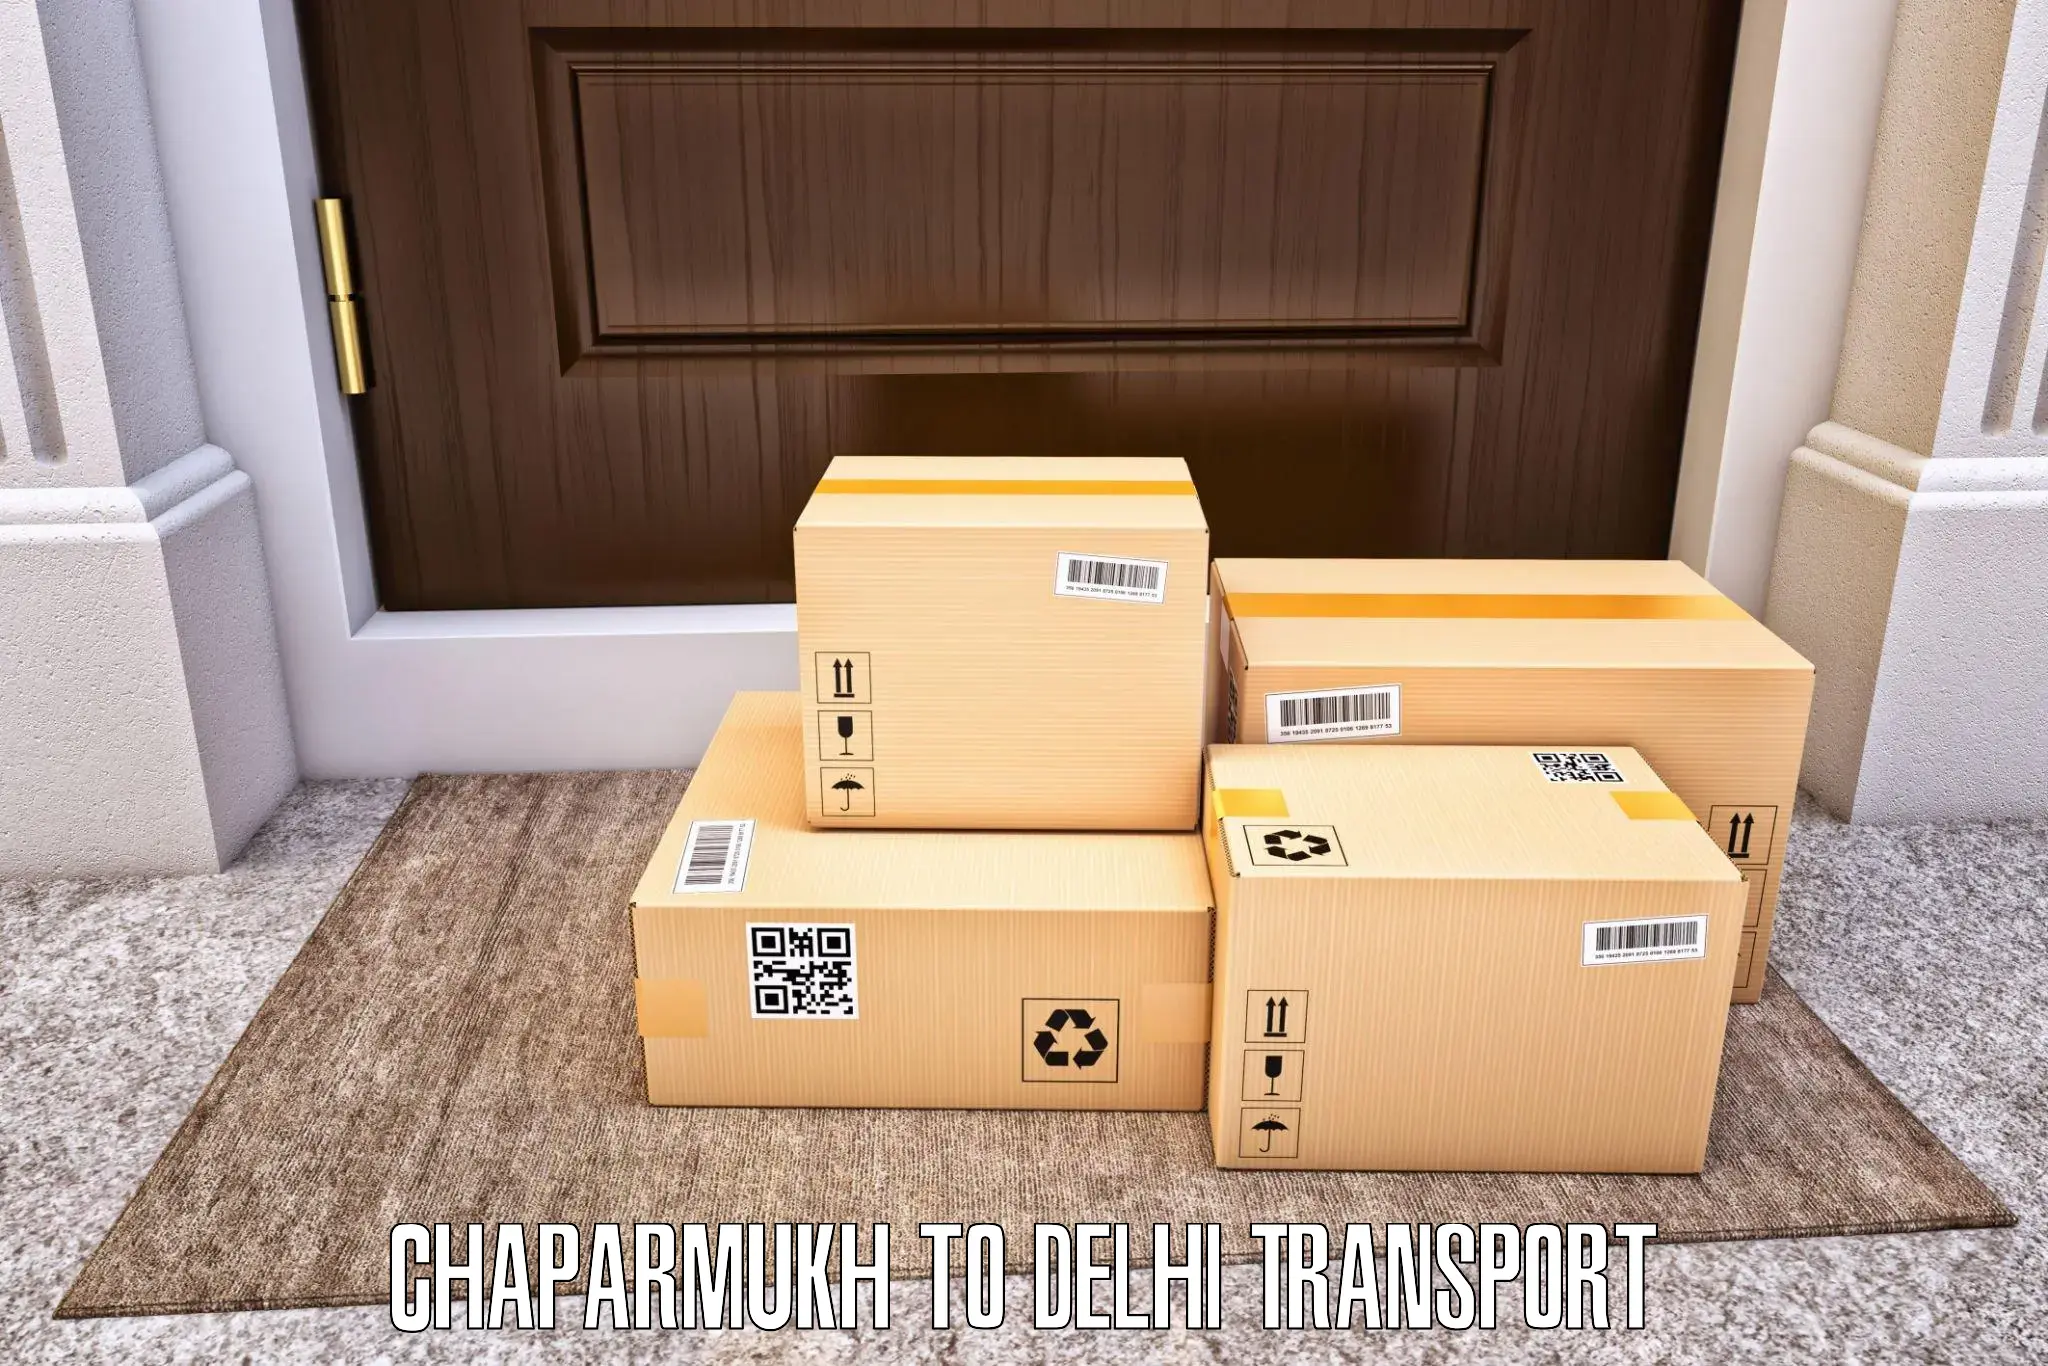 Door to door transport services Chaparmukh to NCR